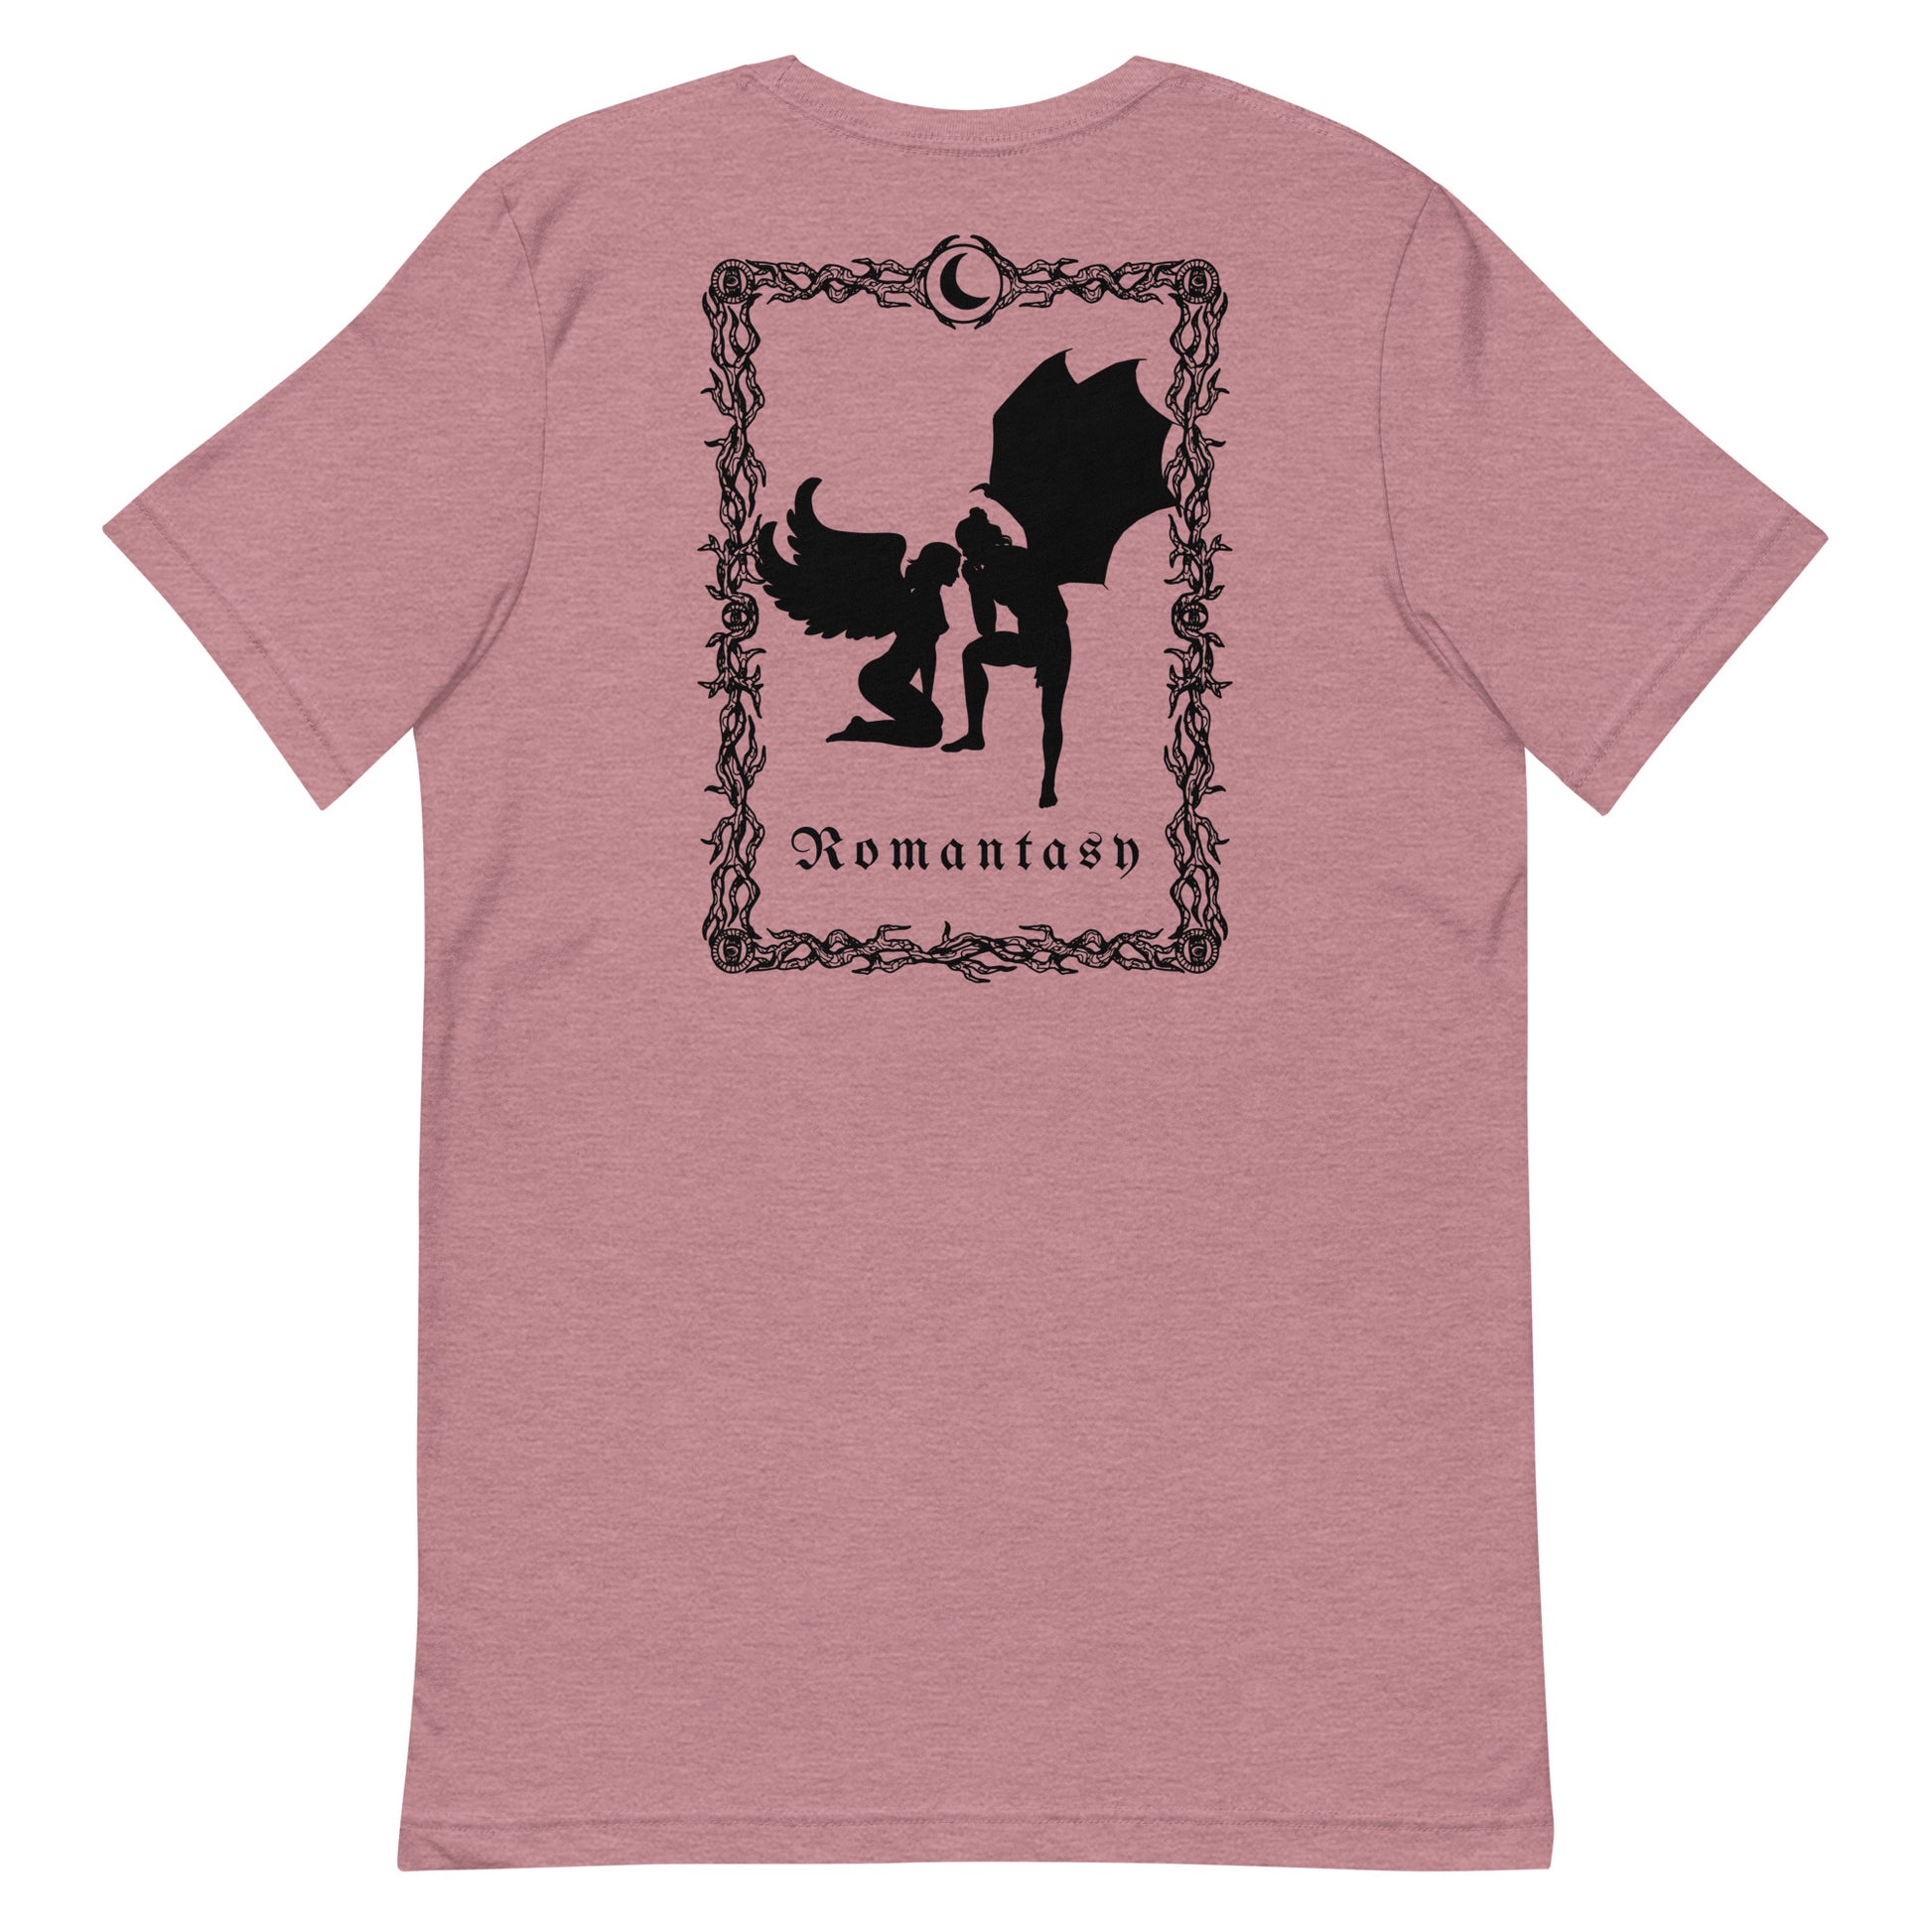 Back Side- Romantasy Romance Fantasy Book Tee T-shirt